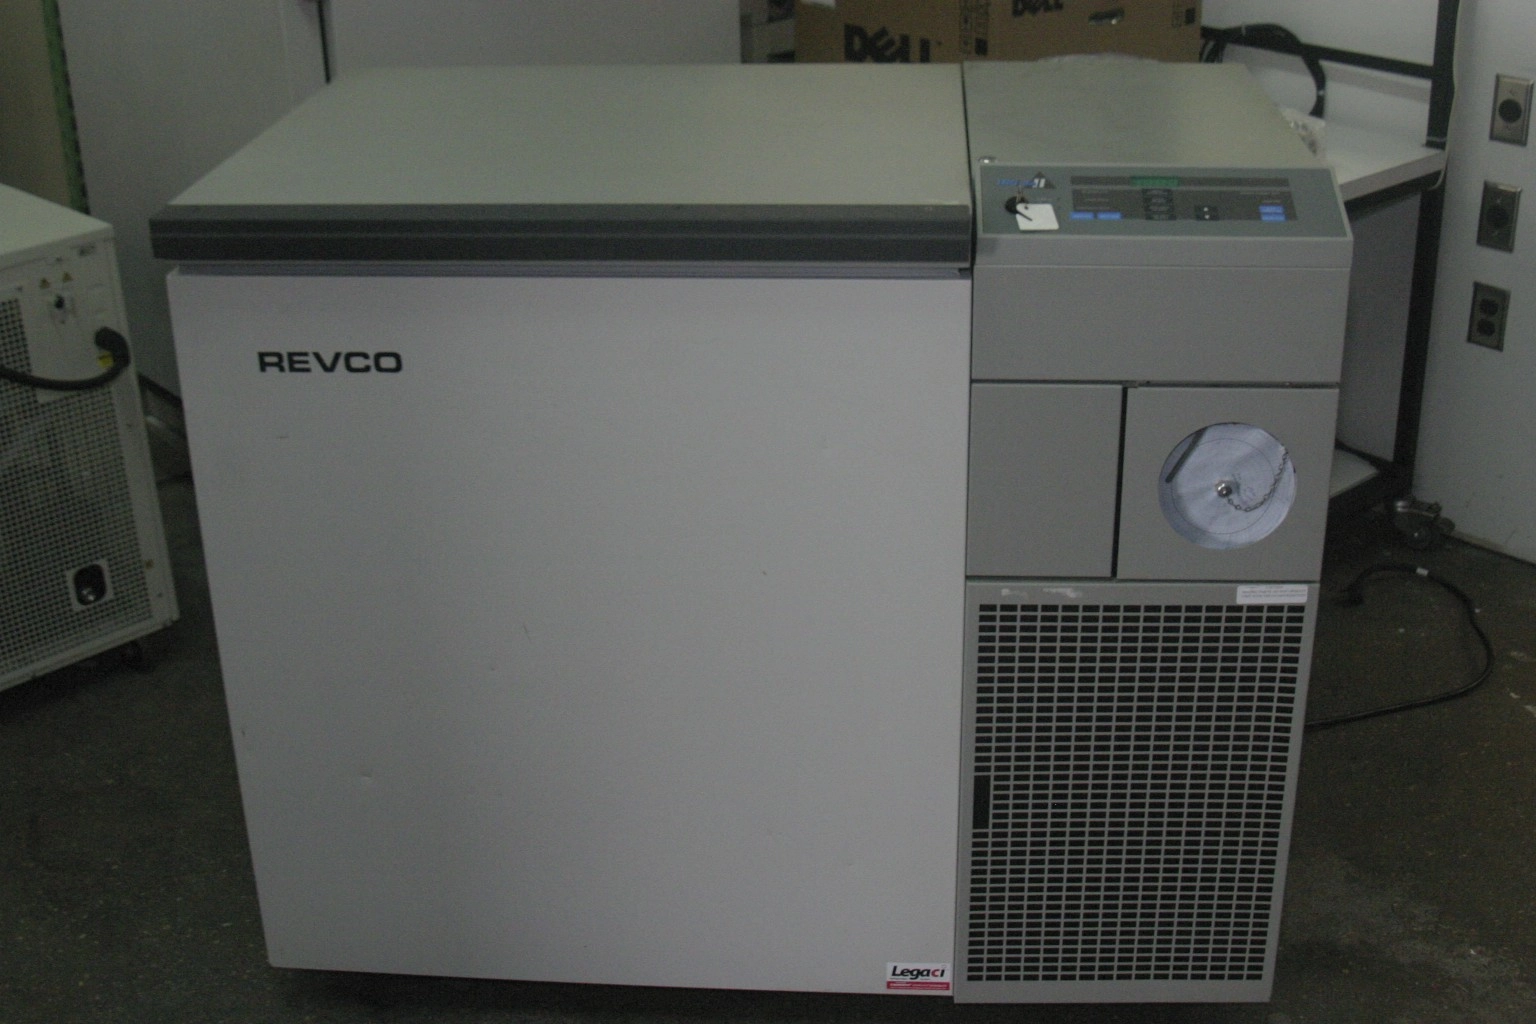 Revco -86 Ultima Freezer -86 Freezer Ultralow ULT790-9-A31 120 VOLT 7 cu. ft.